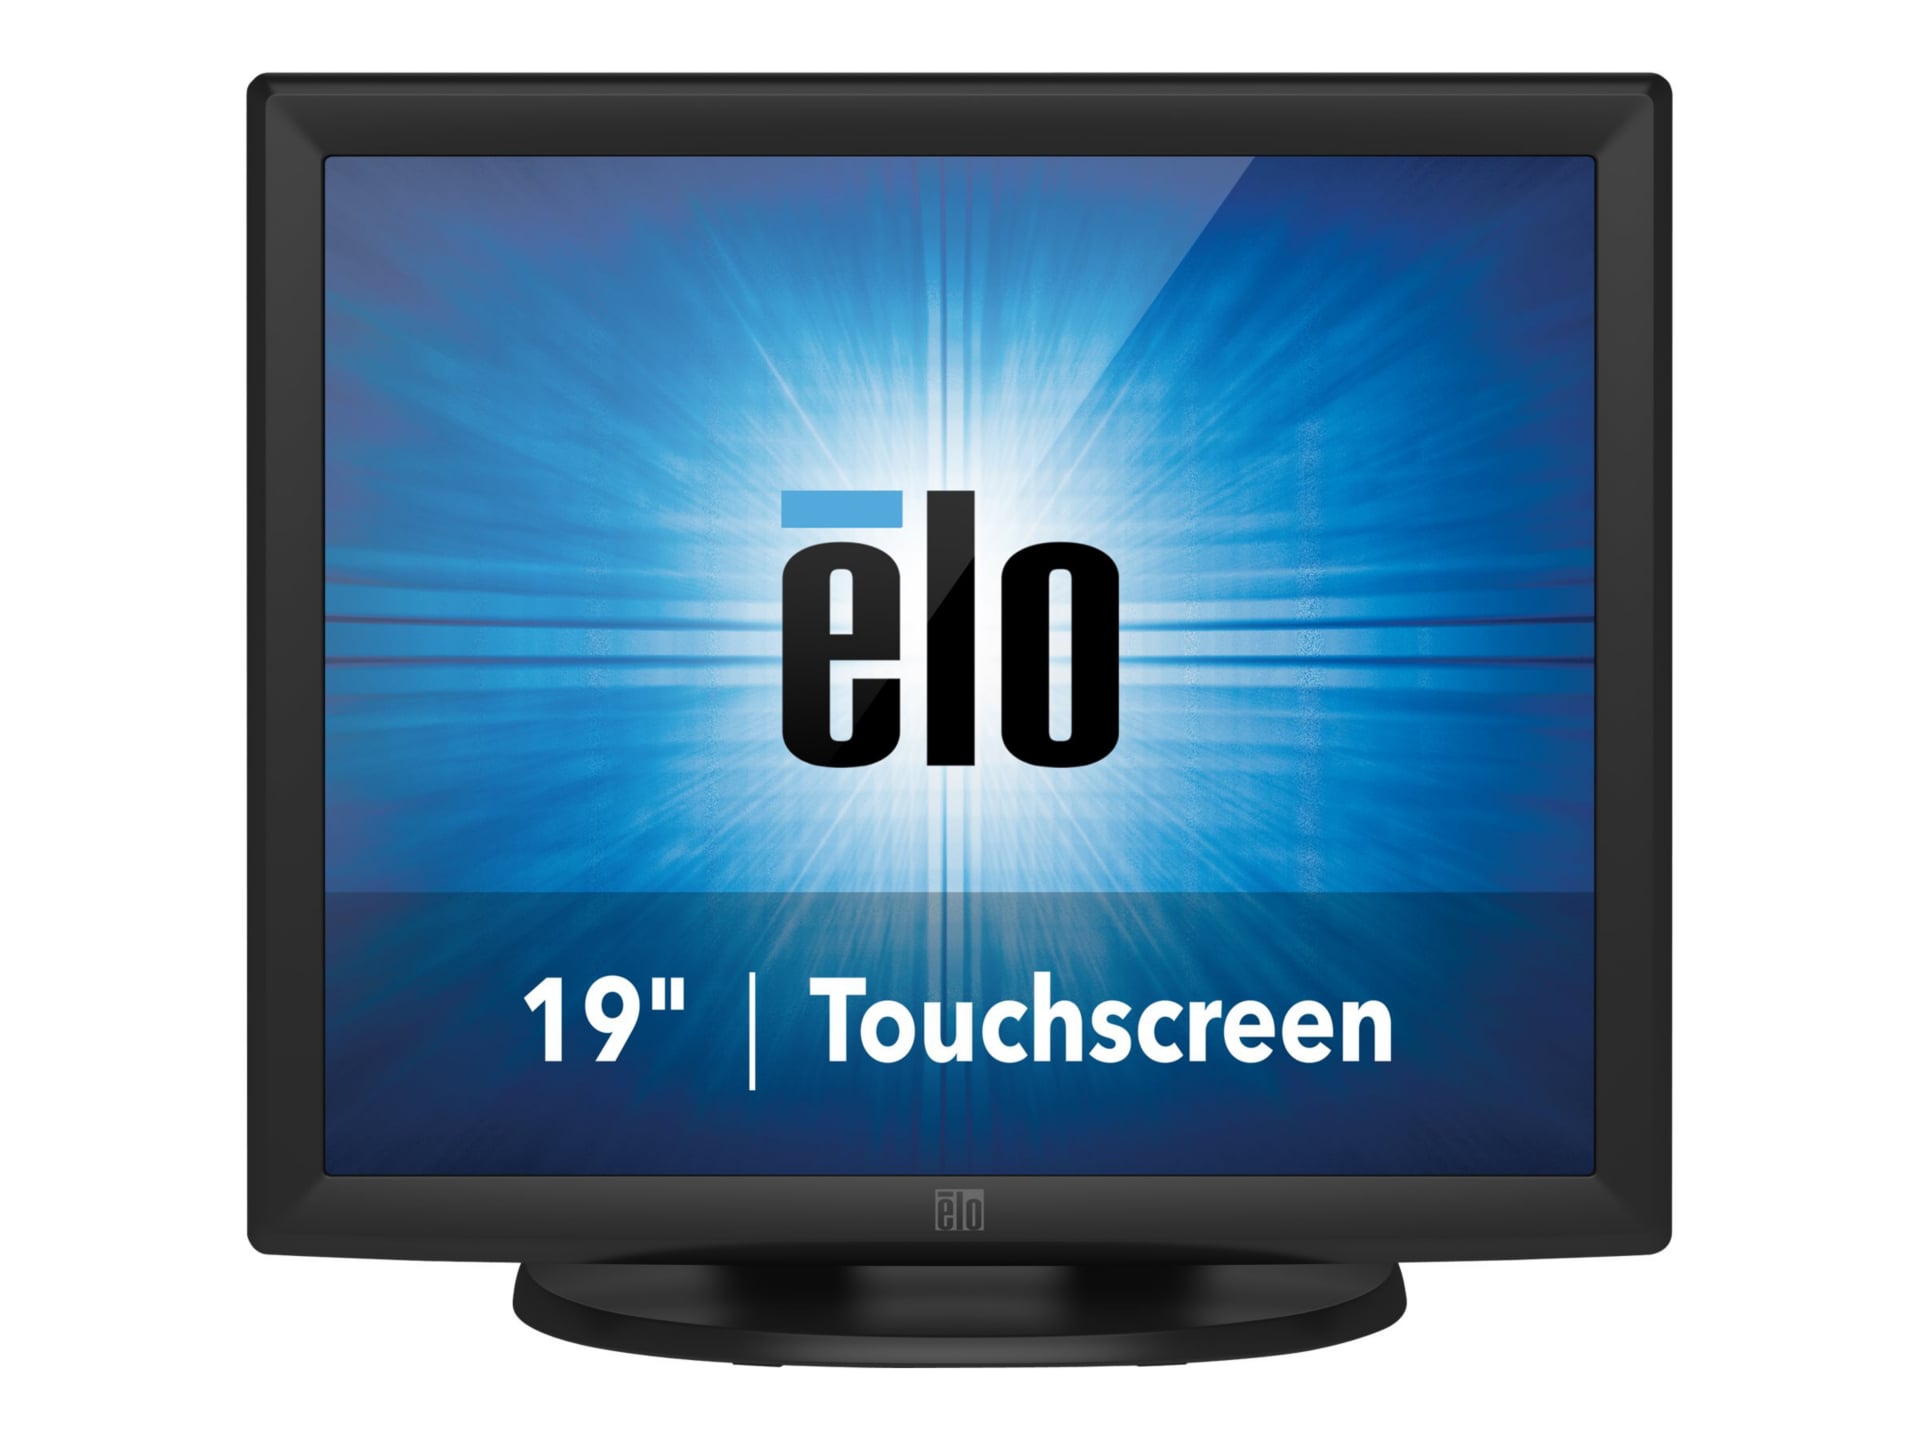 Elo 1915L - 19" Touchscreen Monitor